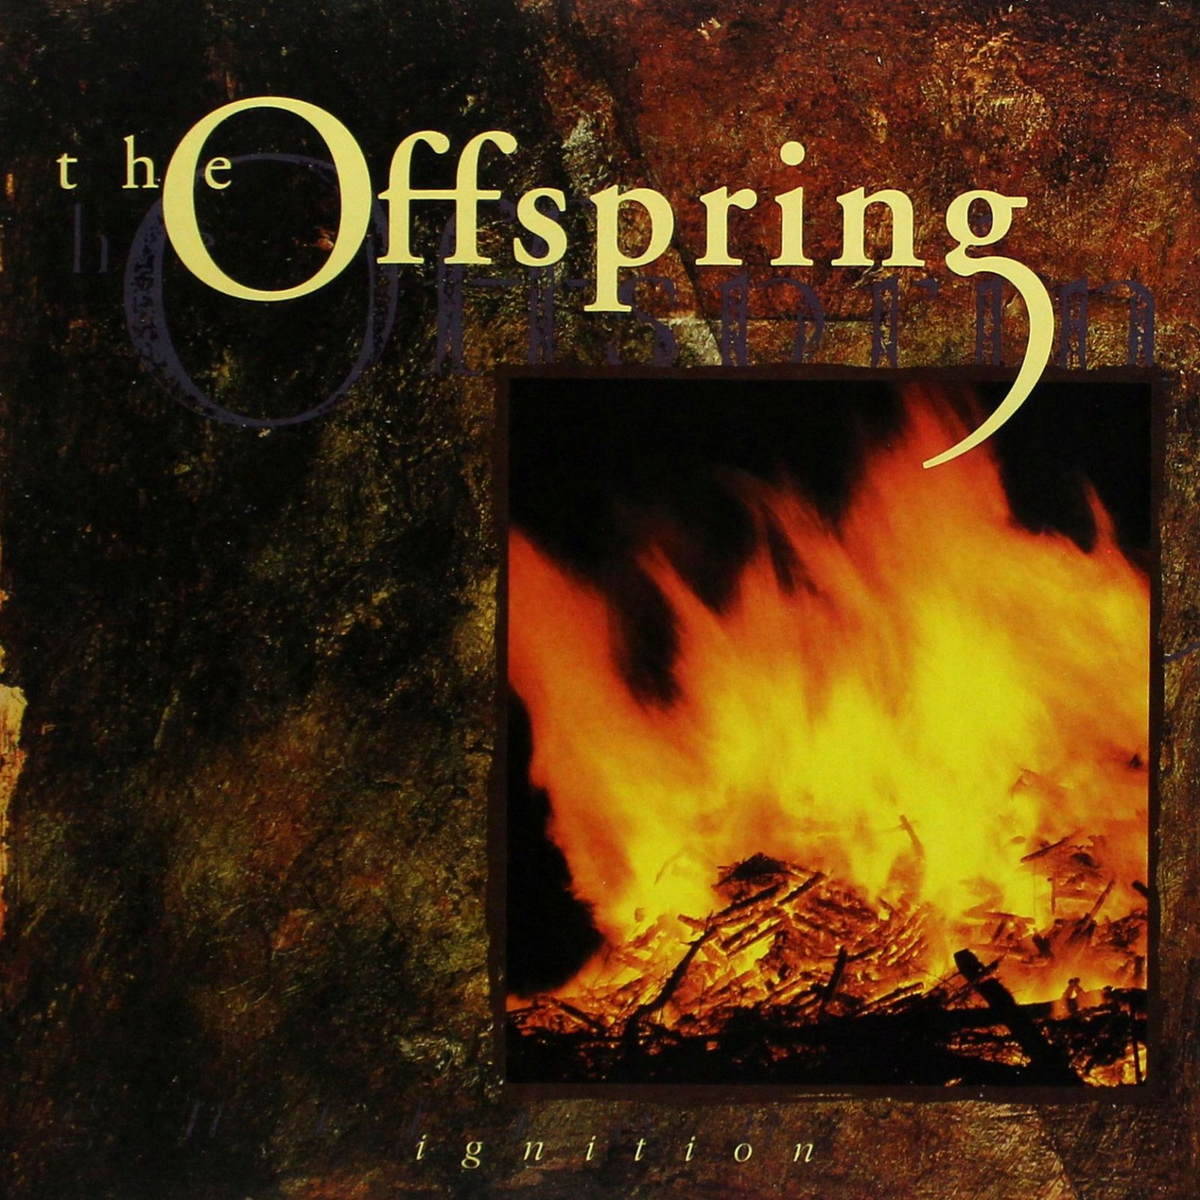 Виниловая пластинка Offspring, The, Ignition (8714092686715) виниловая пластинка the offspring ignition lp